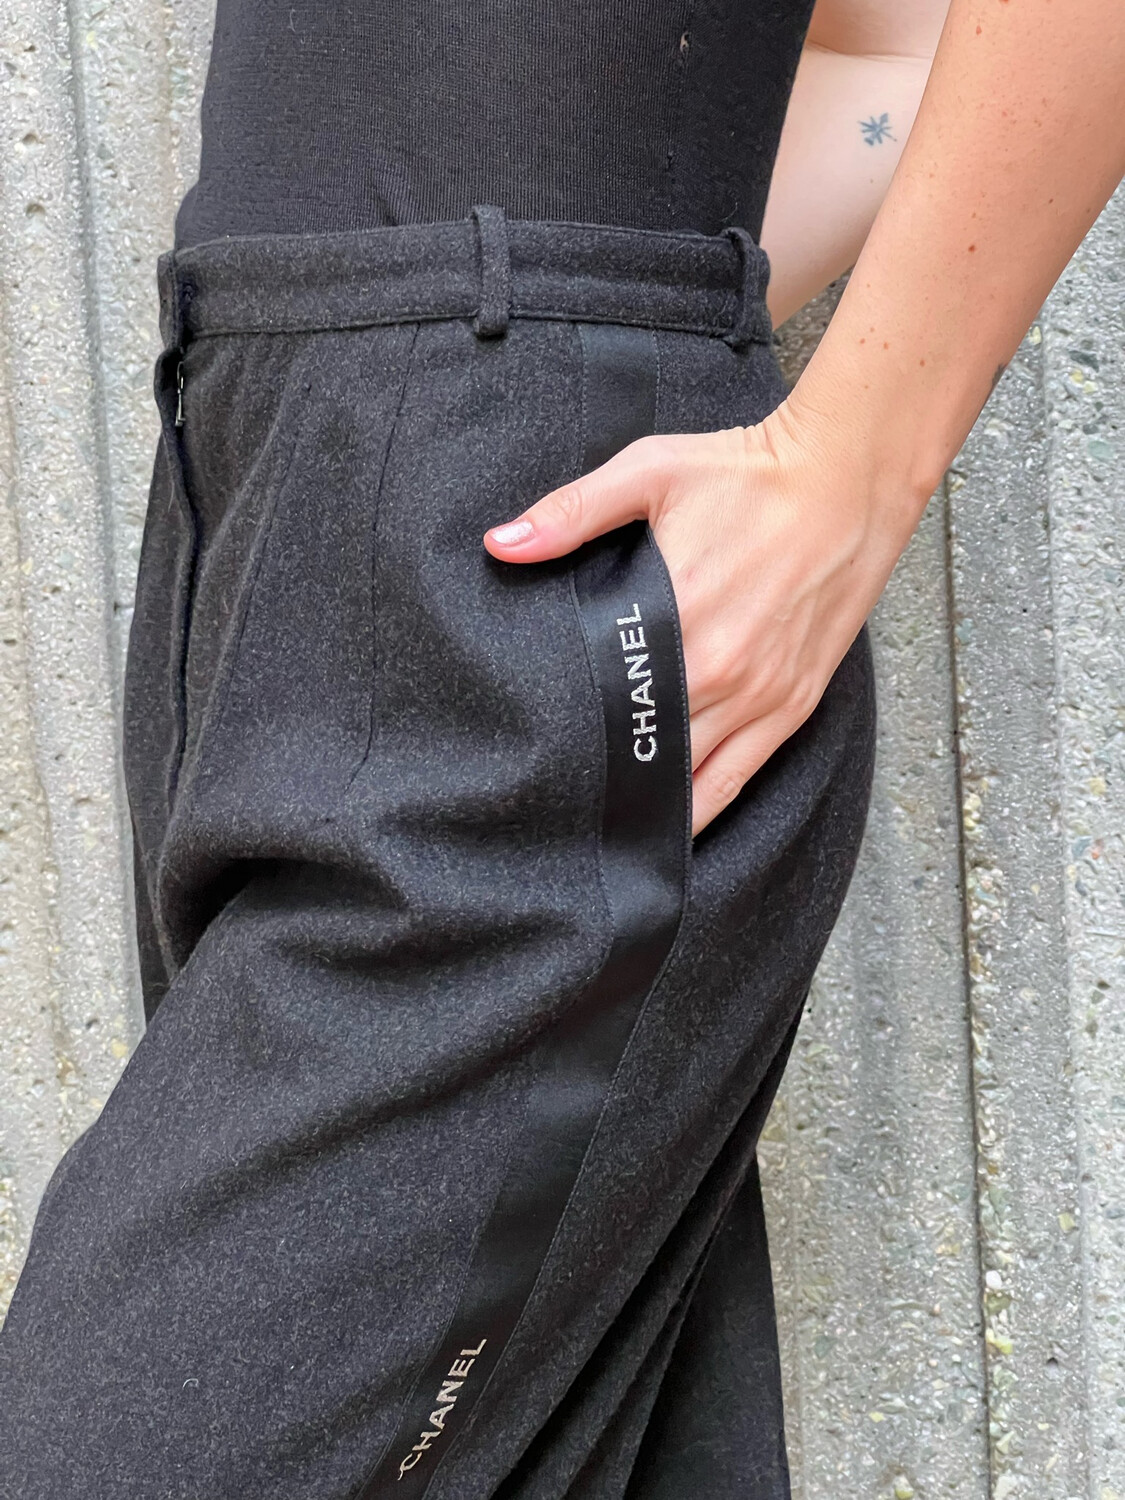 Vintage Chanel Black Linen Pants